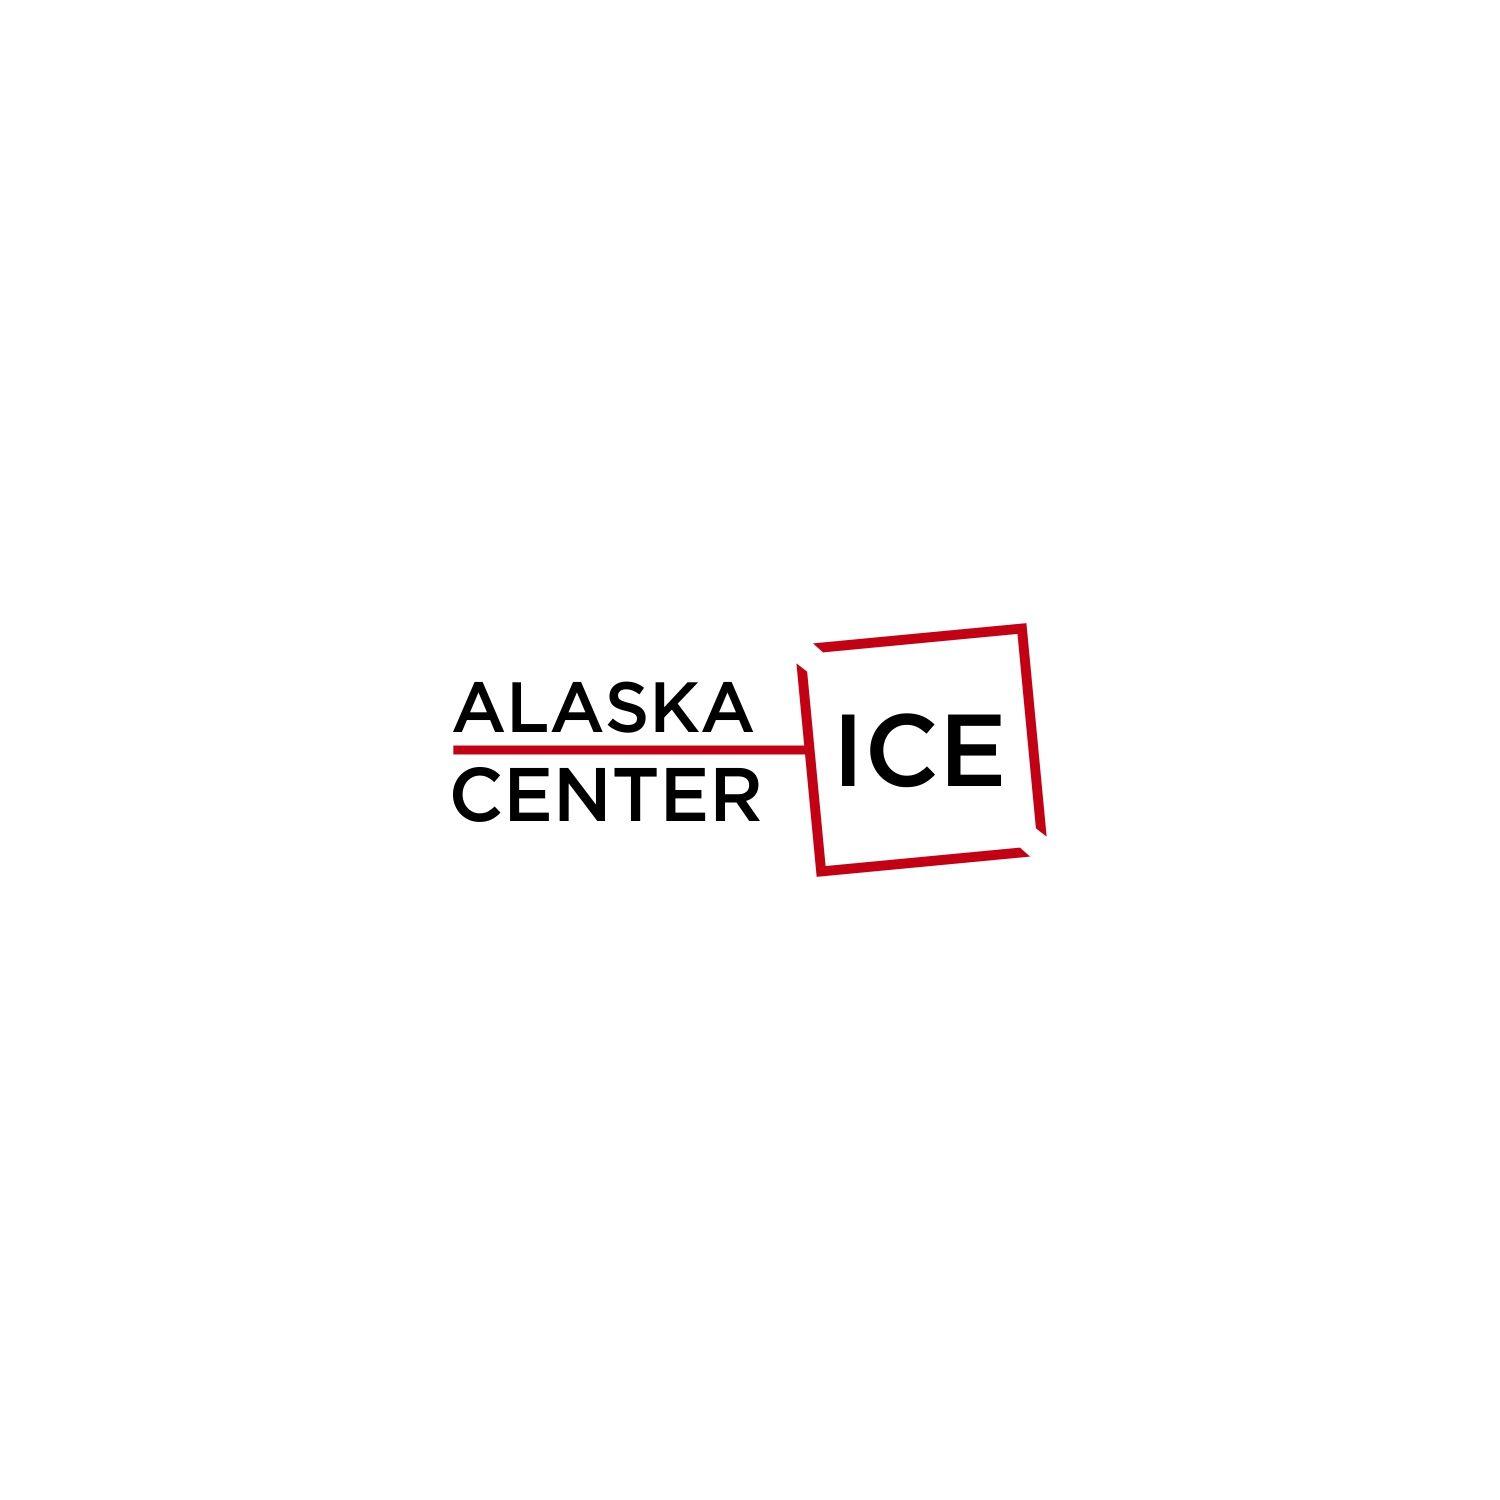 Black and Orange Alaska Logo - Business Logo Design for Alaska Center ICE by luvi.rafael | Design ...